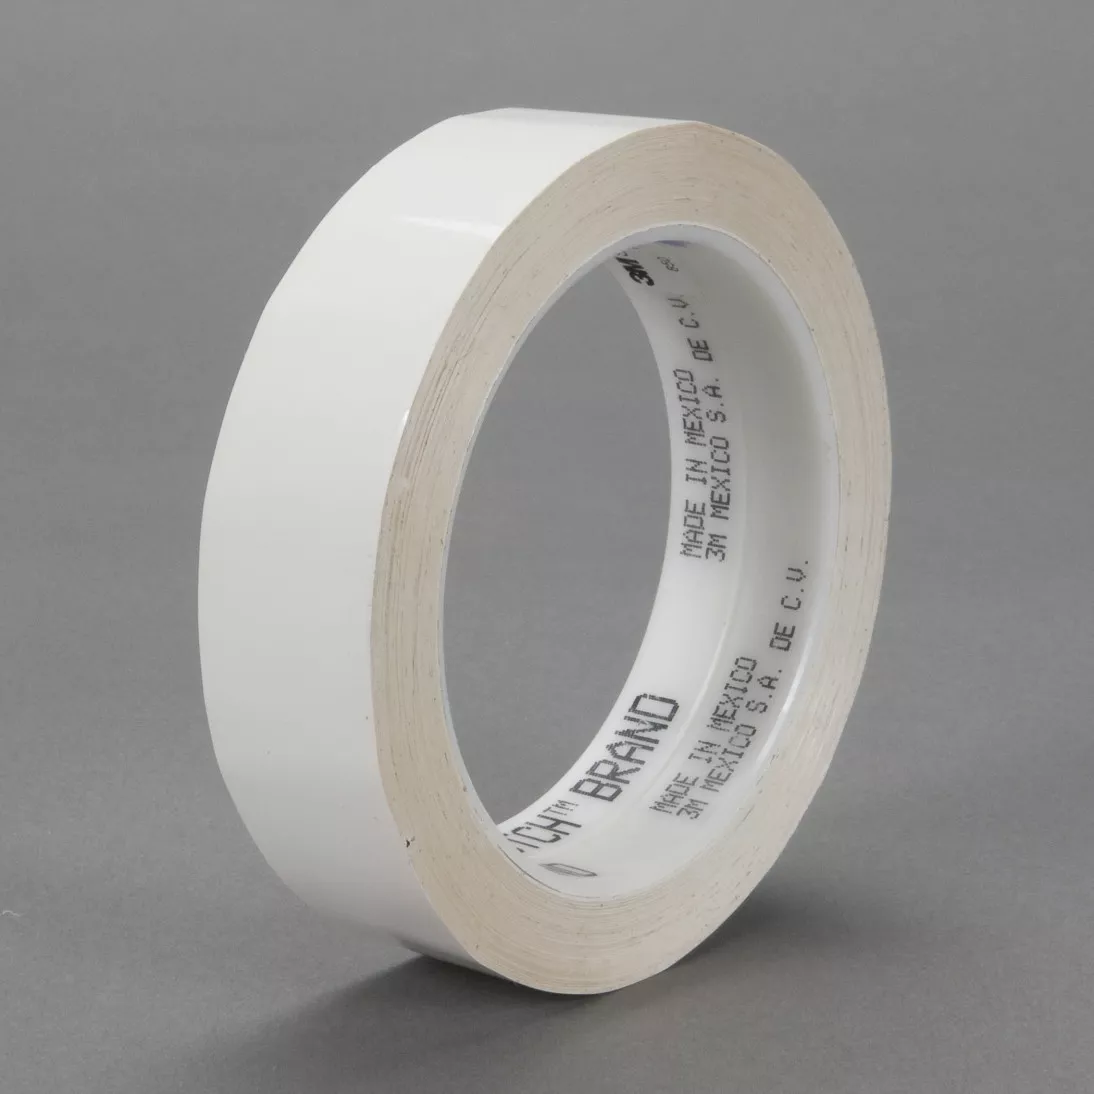 3M™ Polyester Film Tape 850, White, 1 1/2 in x 72 yd, 1.9 mil, 24 rolls per case